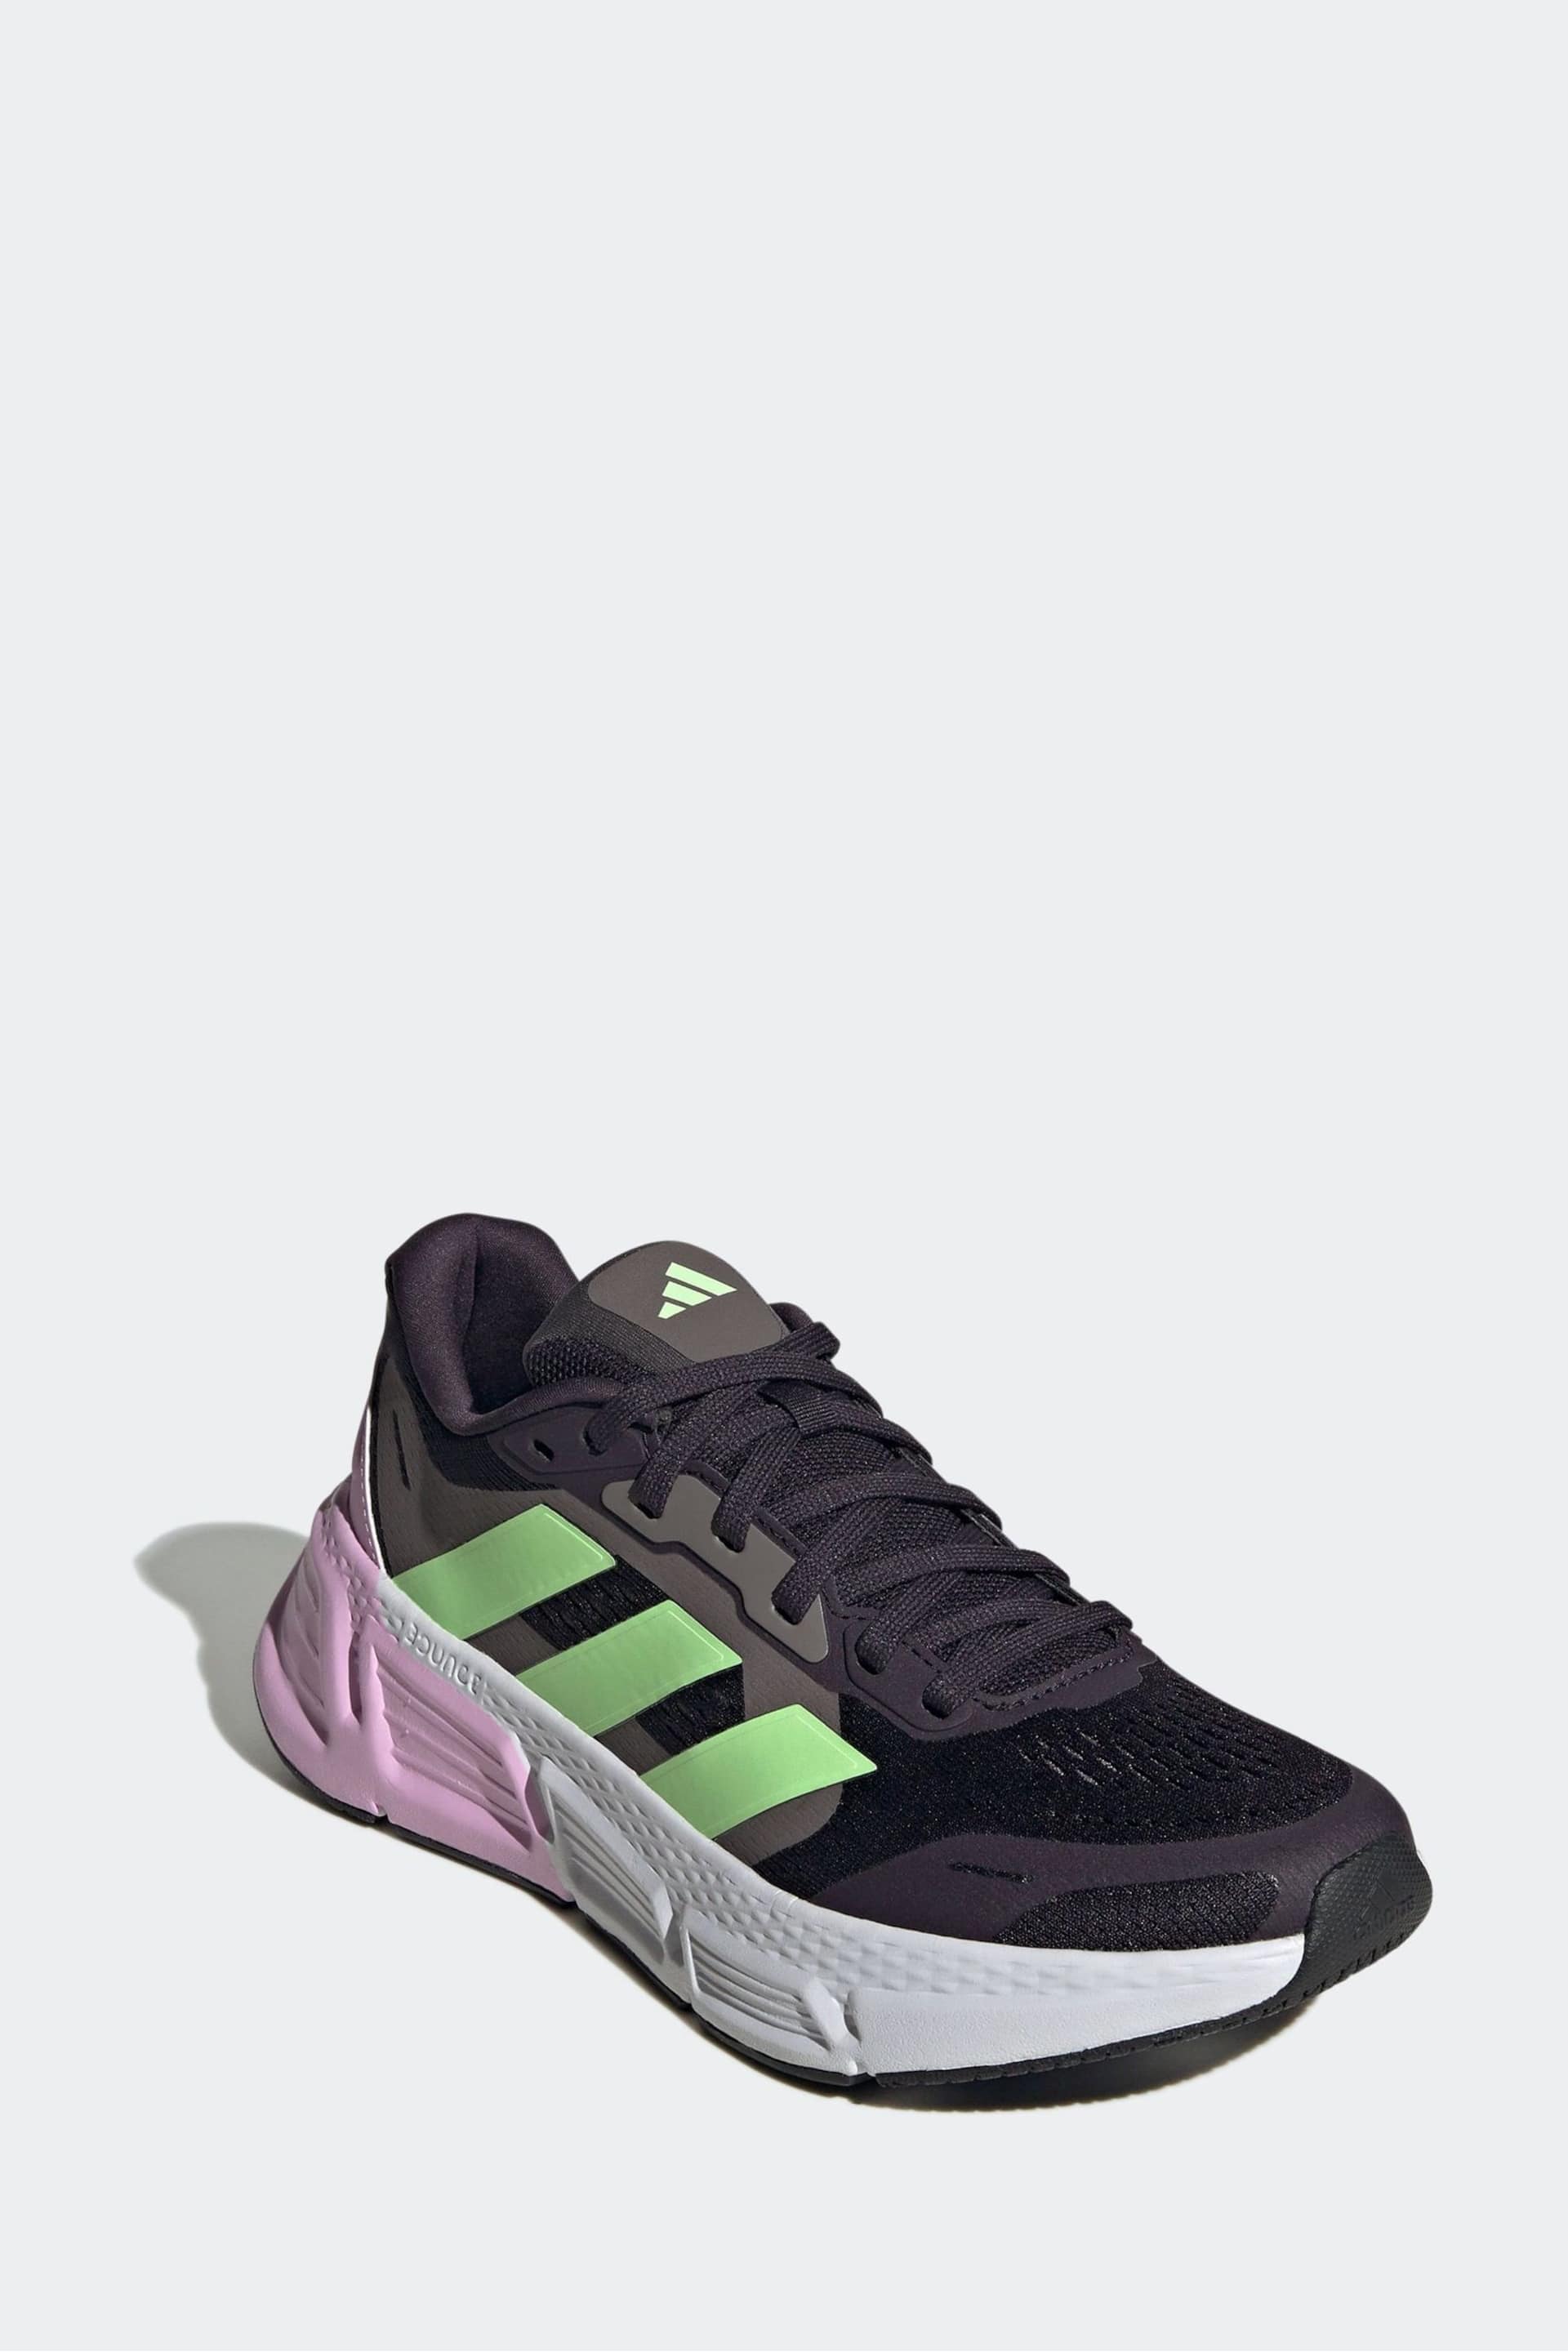 adidas Purple Questar Trainers - Image 4 of 8